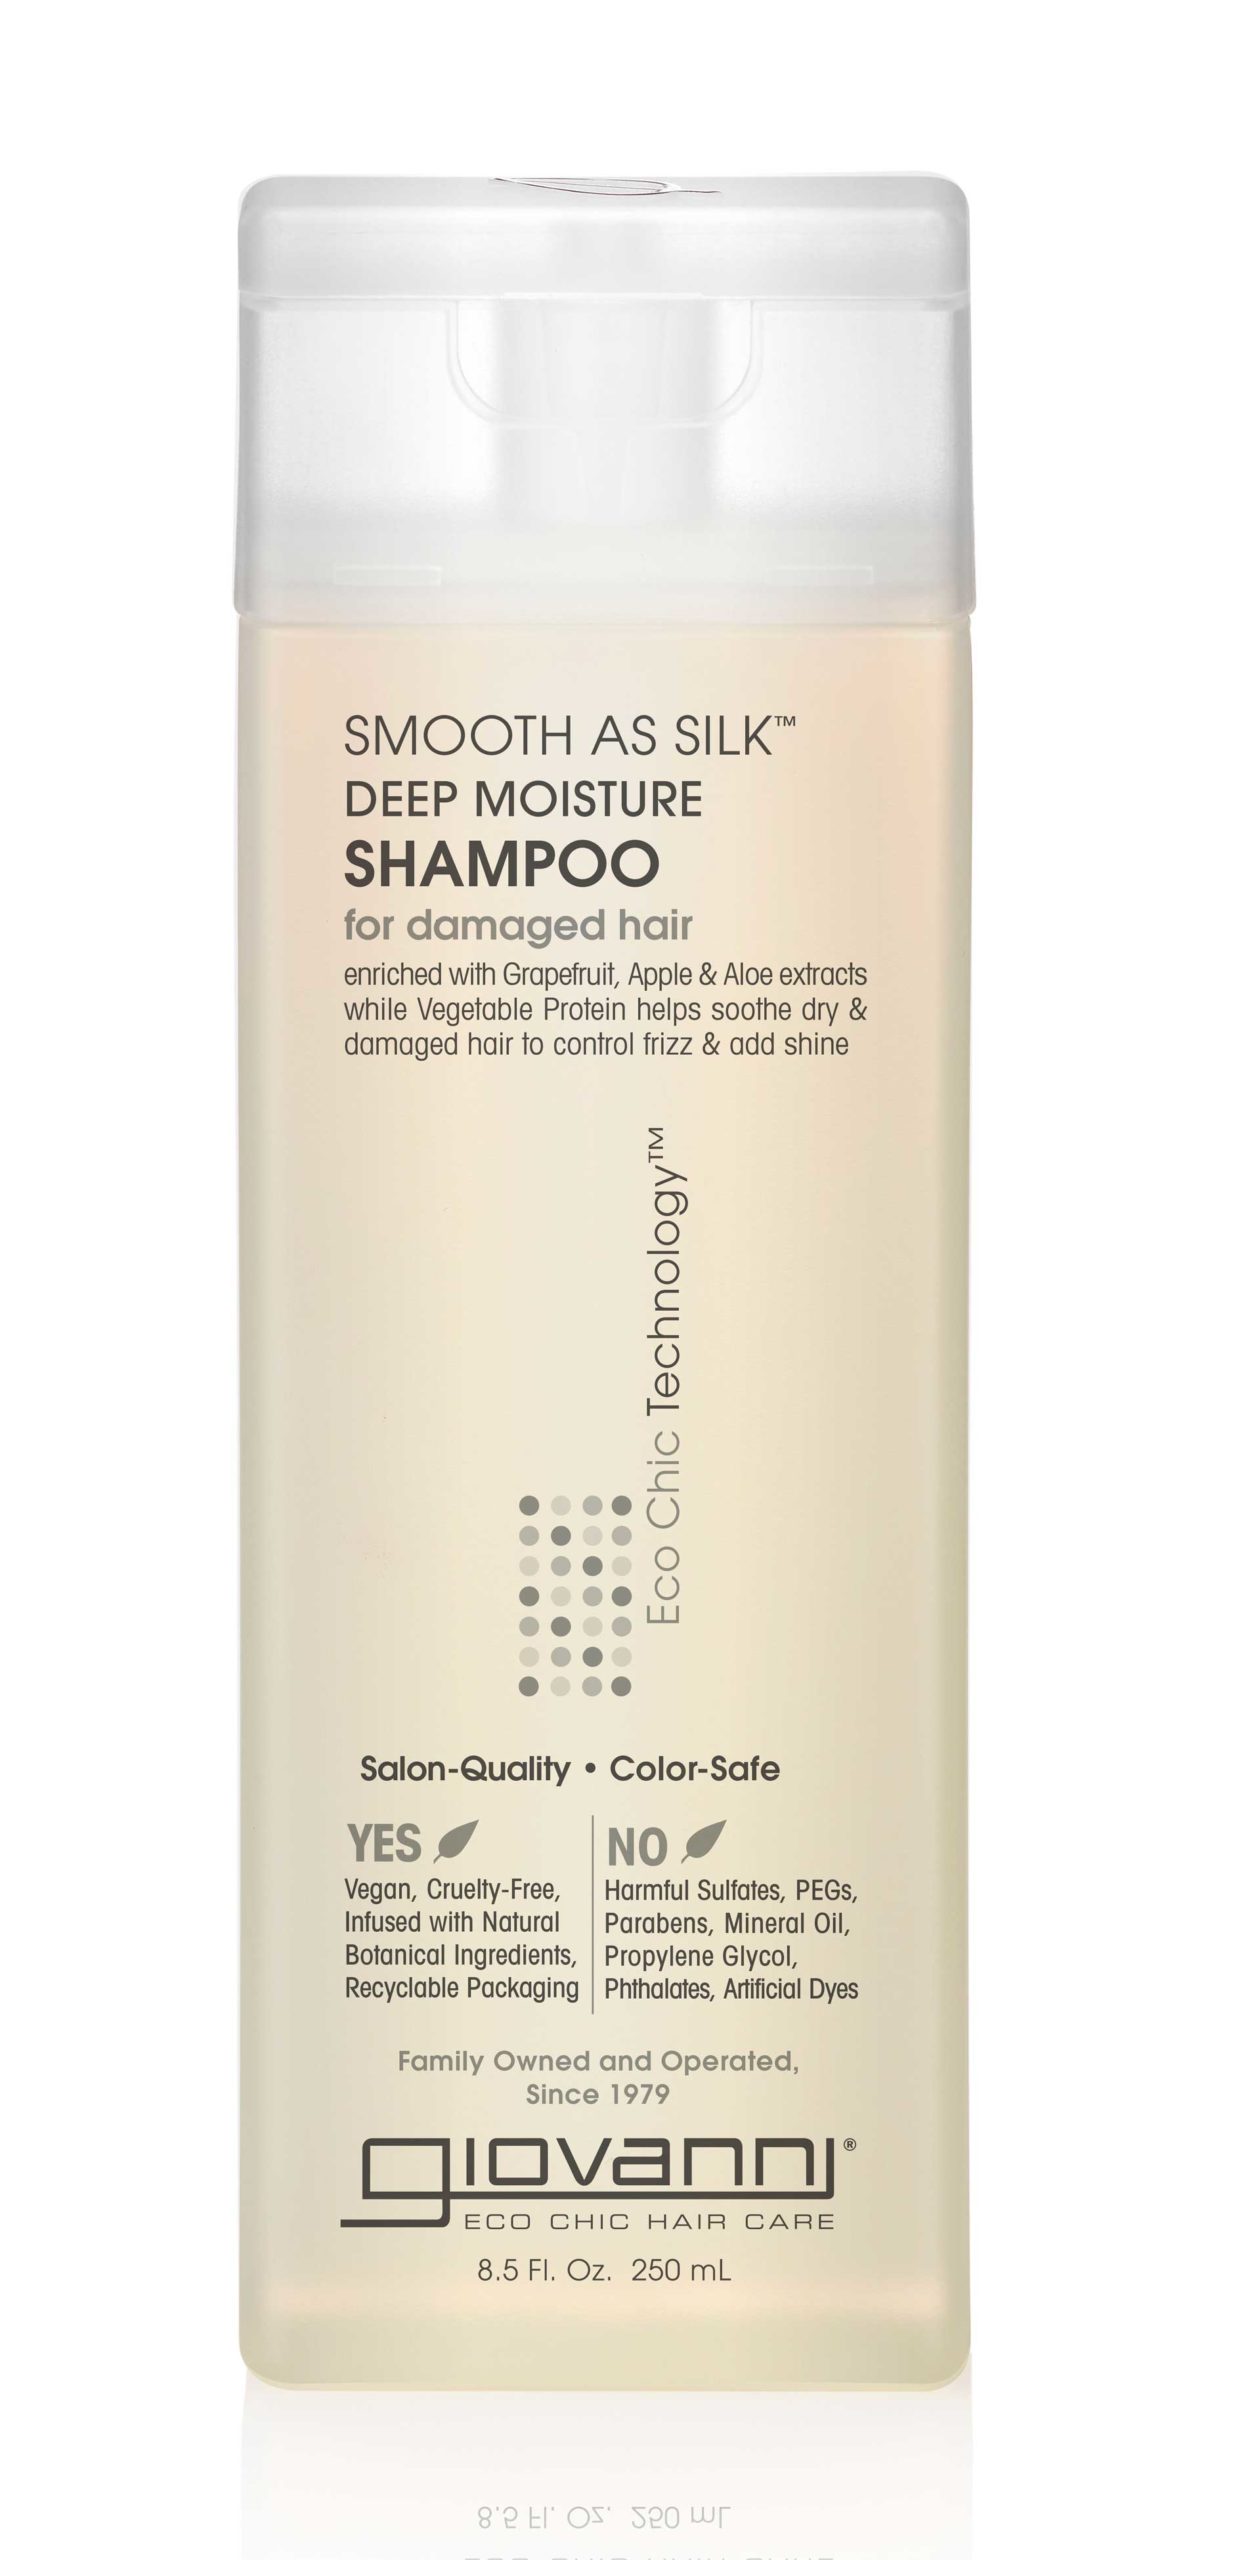 giovanni shampoo ingredients